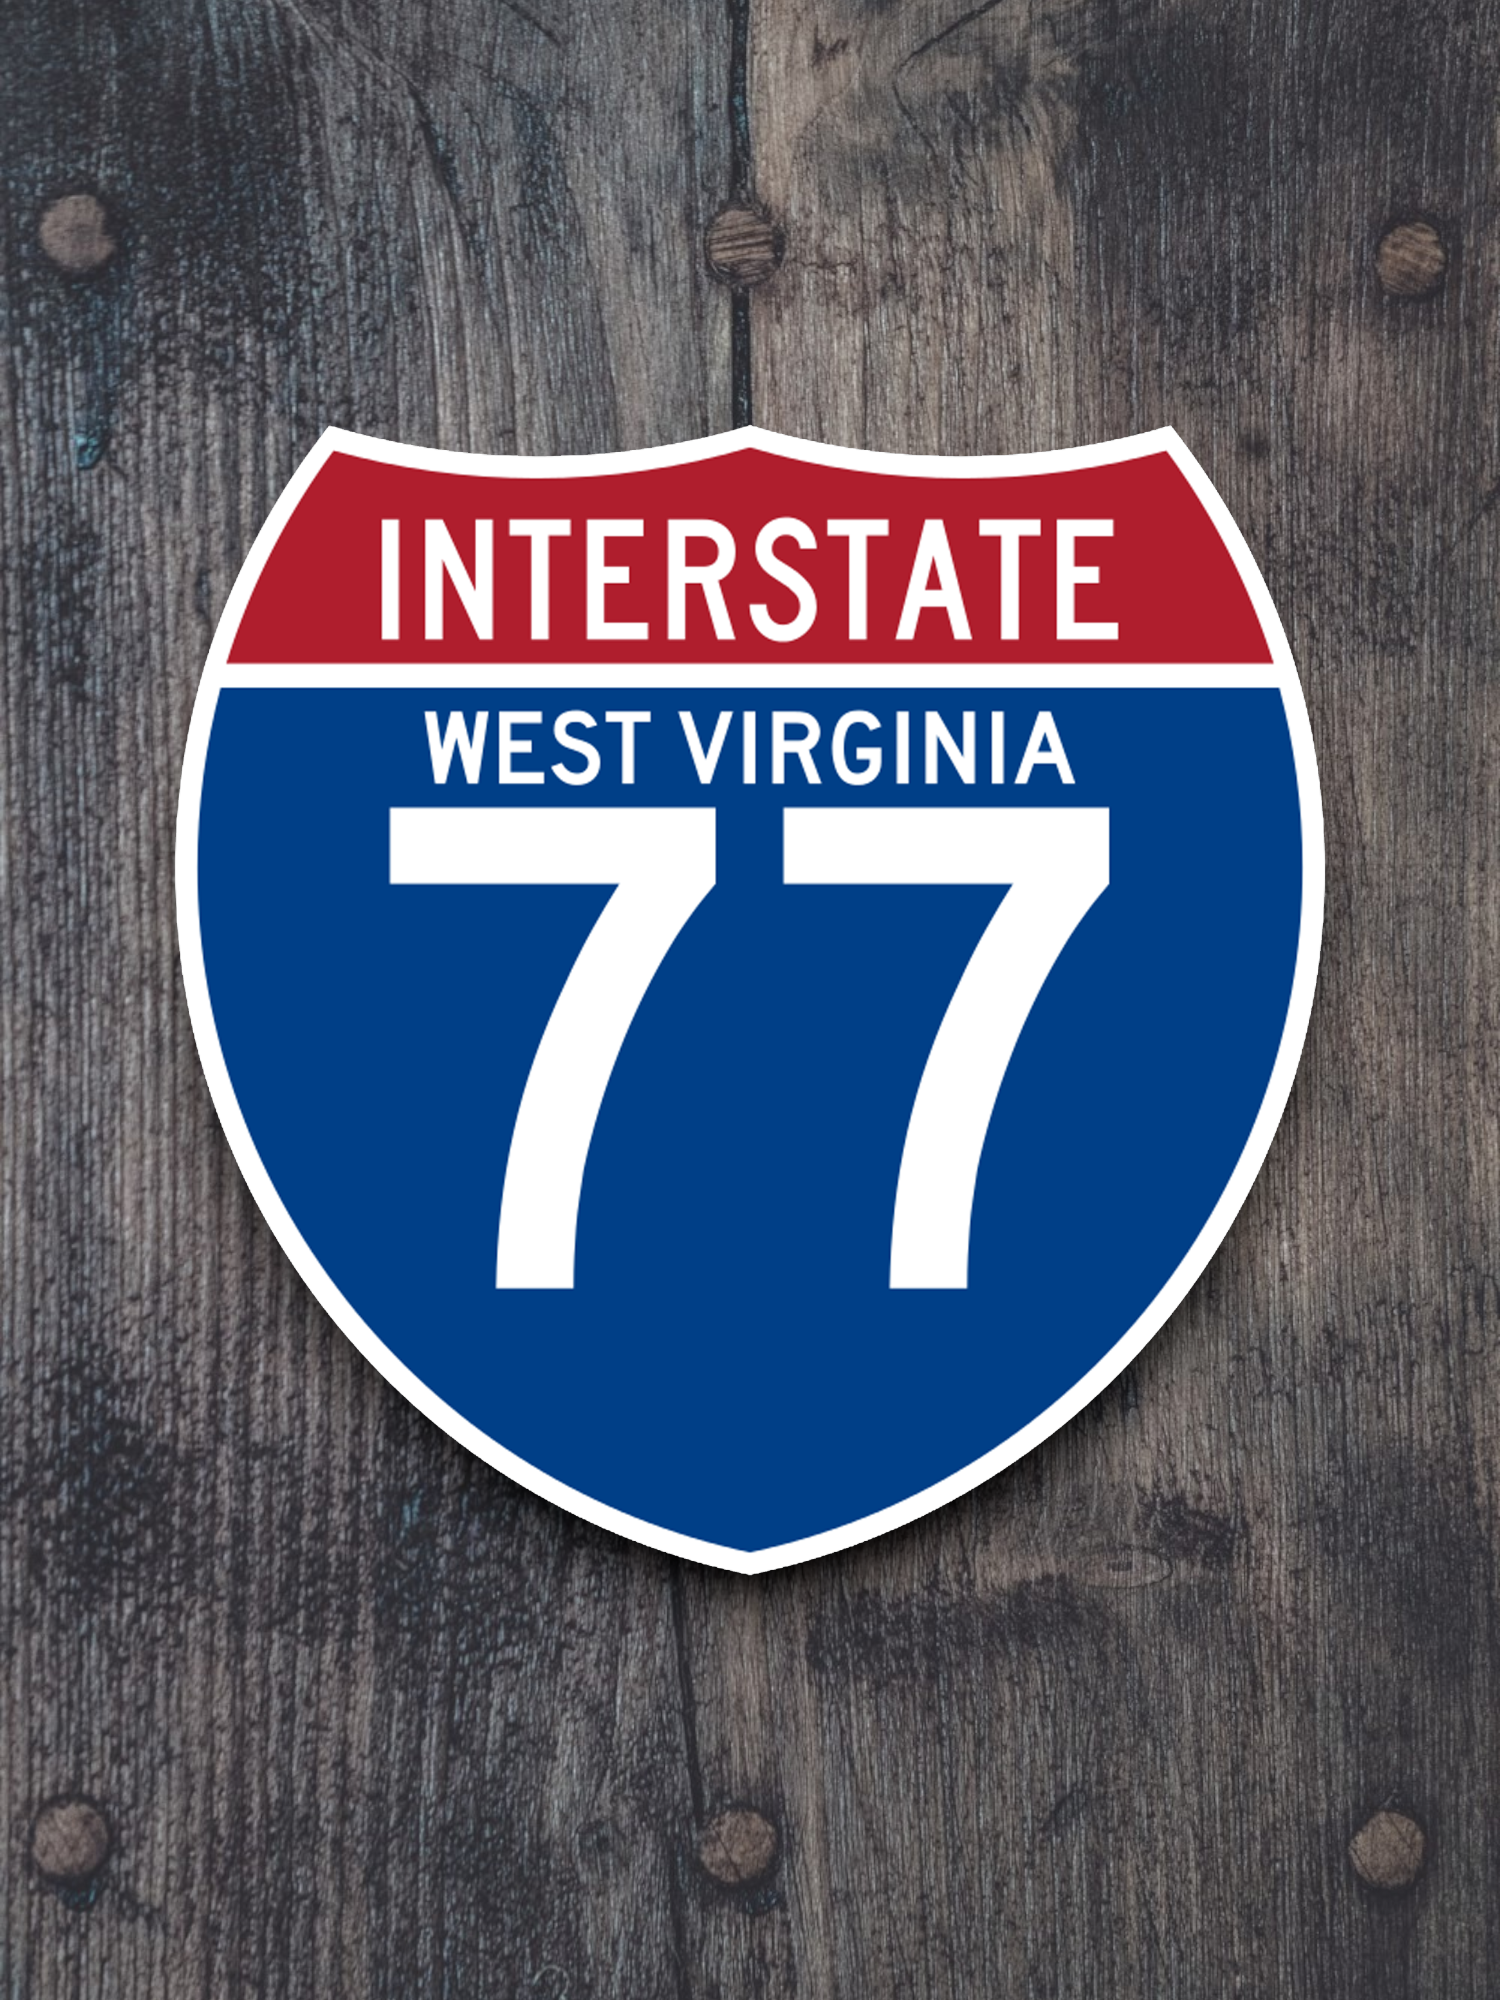 Interstate I-77 West Virginia - Road Sign Sticker